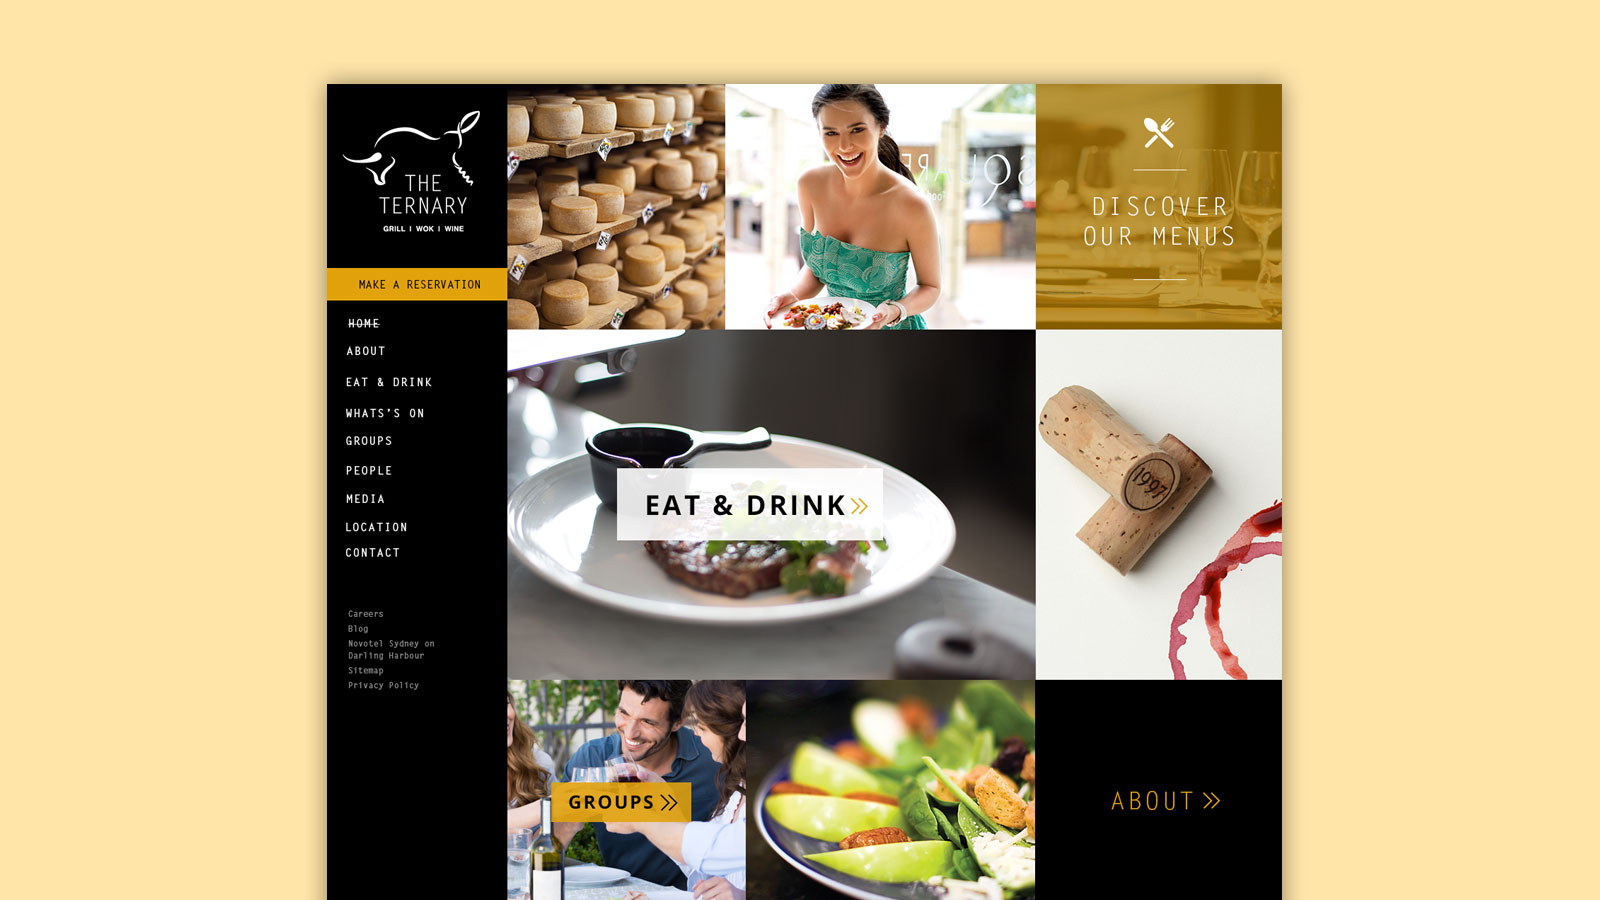 Diseño web The Ternary Restaurante